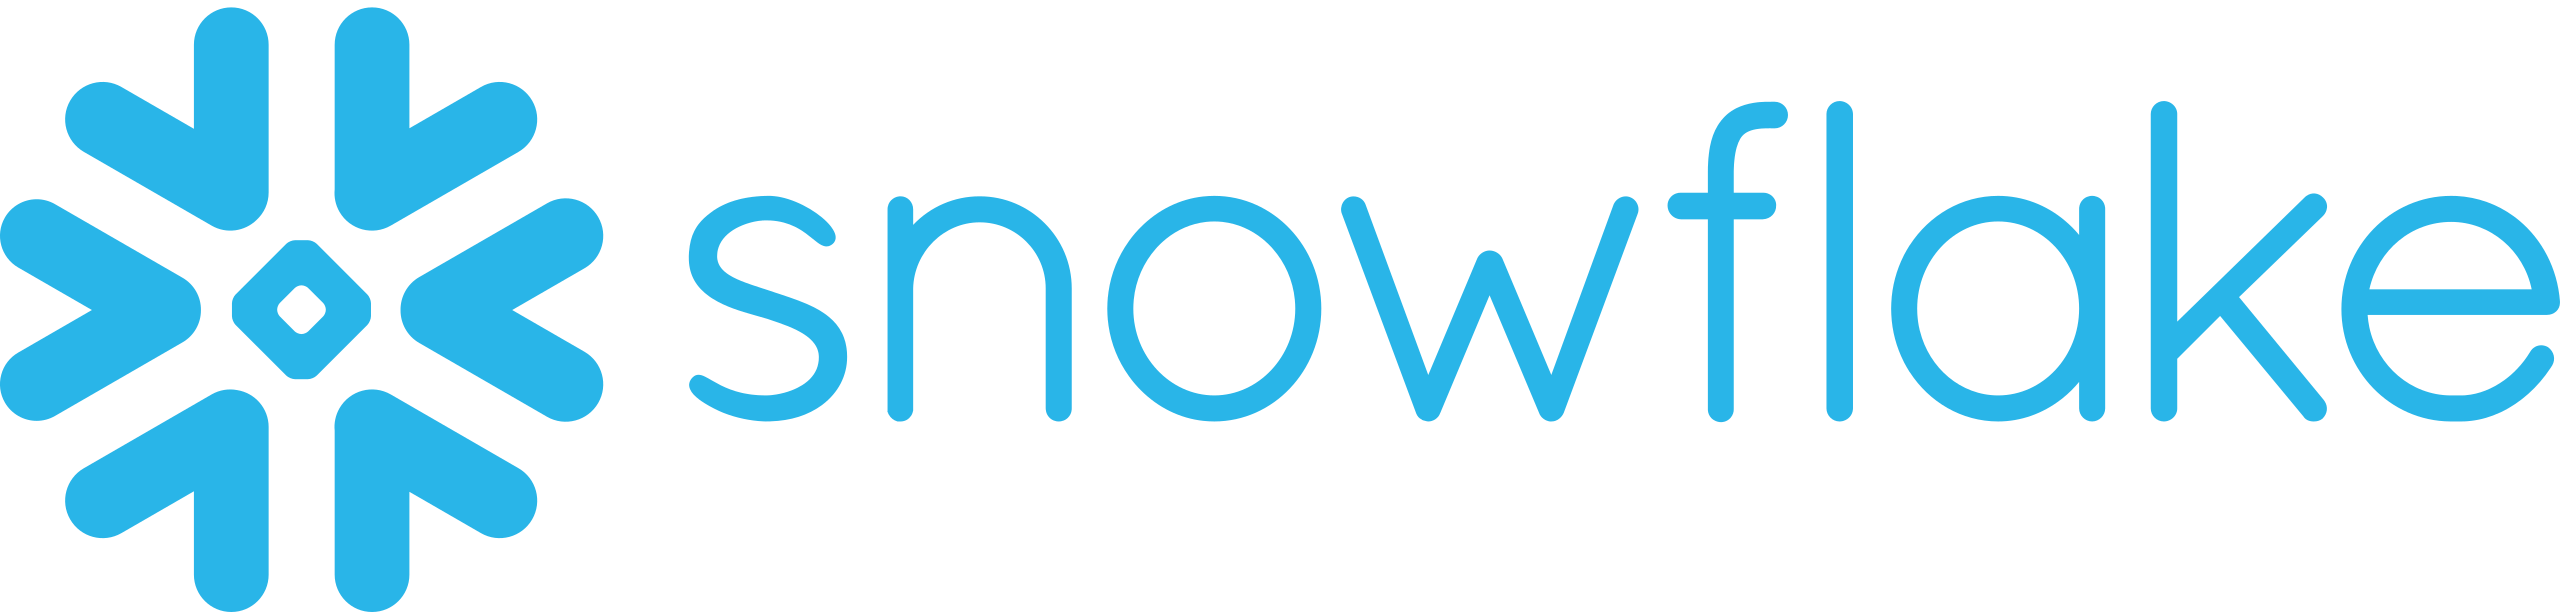 SnowFlake Data Management Platform